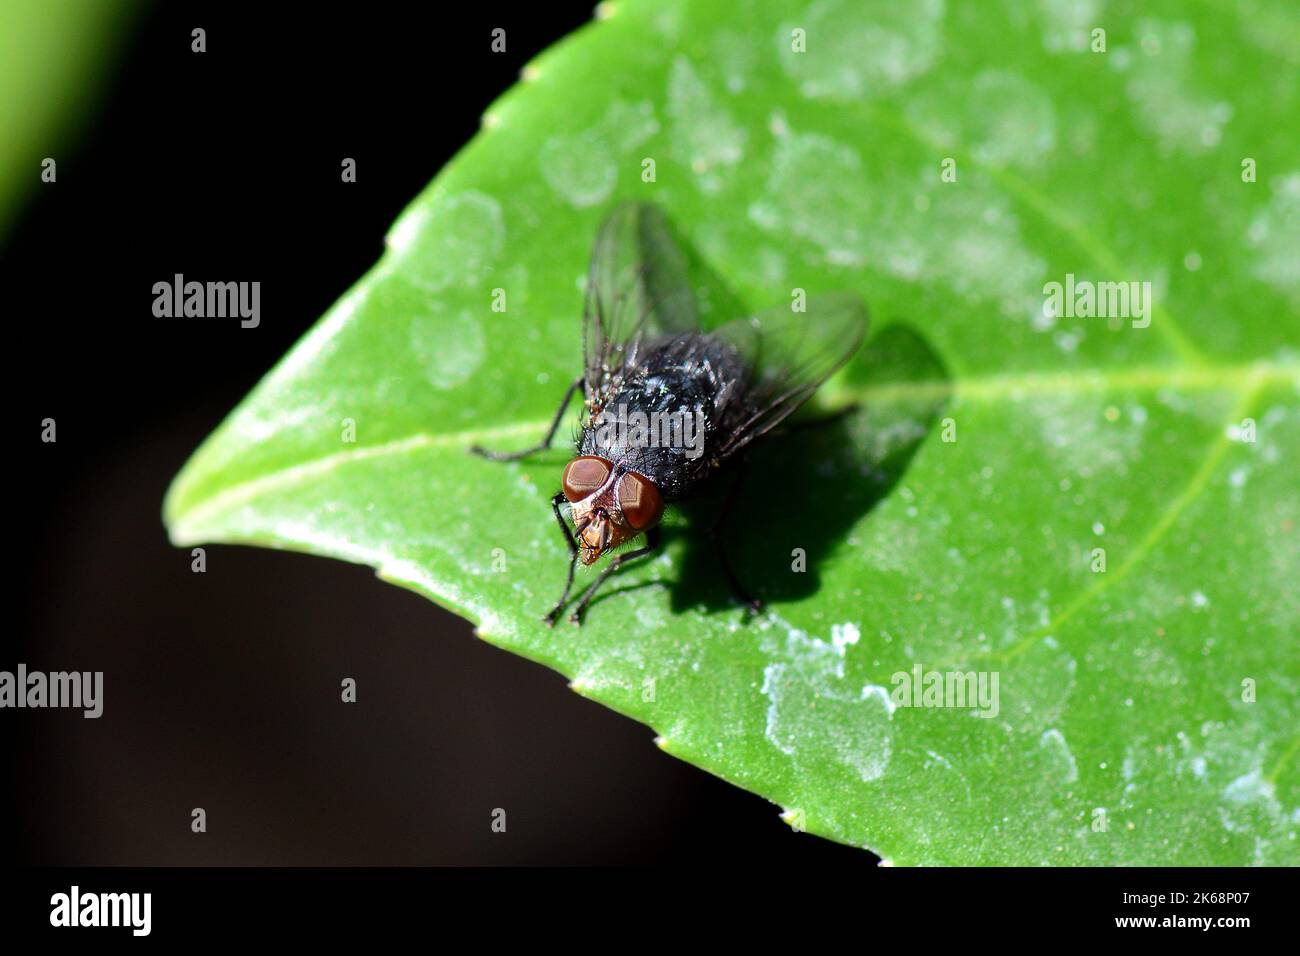 blue bottle fly, Fliege, Calliphora vicina, kék dongólégy, Budapest, Hungary, Magyarország, Europe Stock Photo